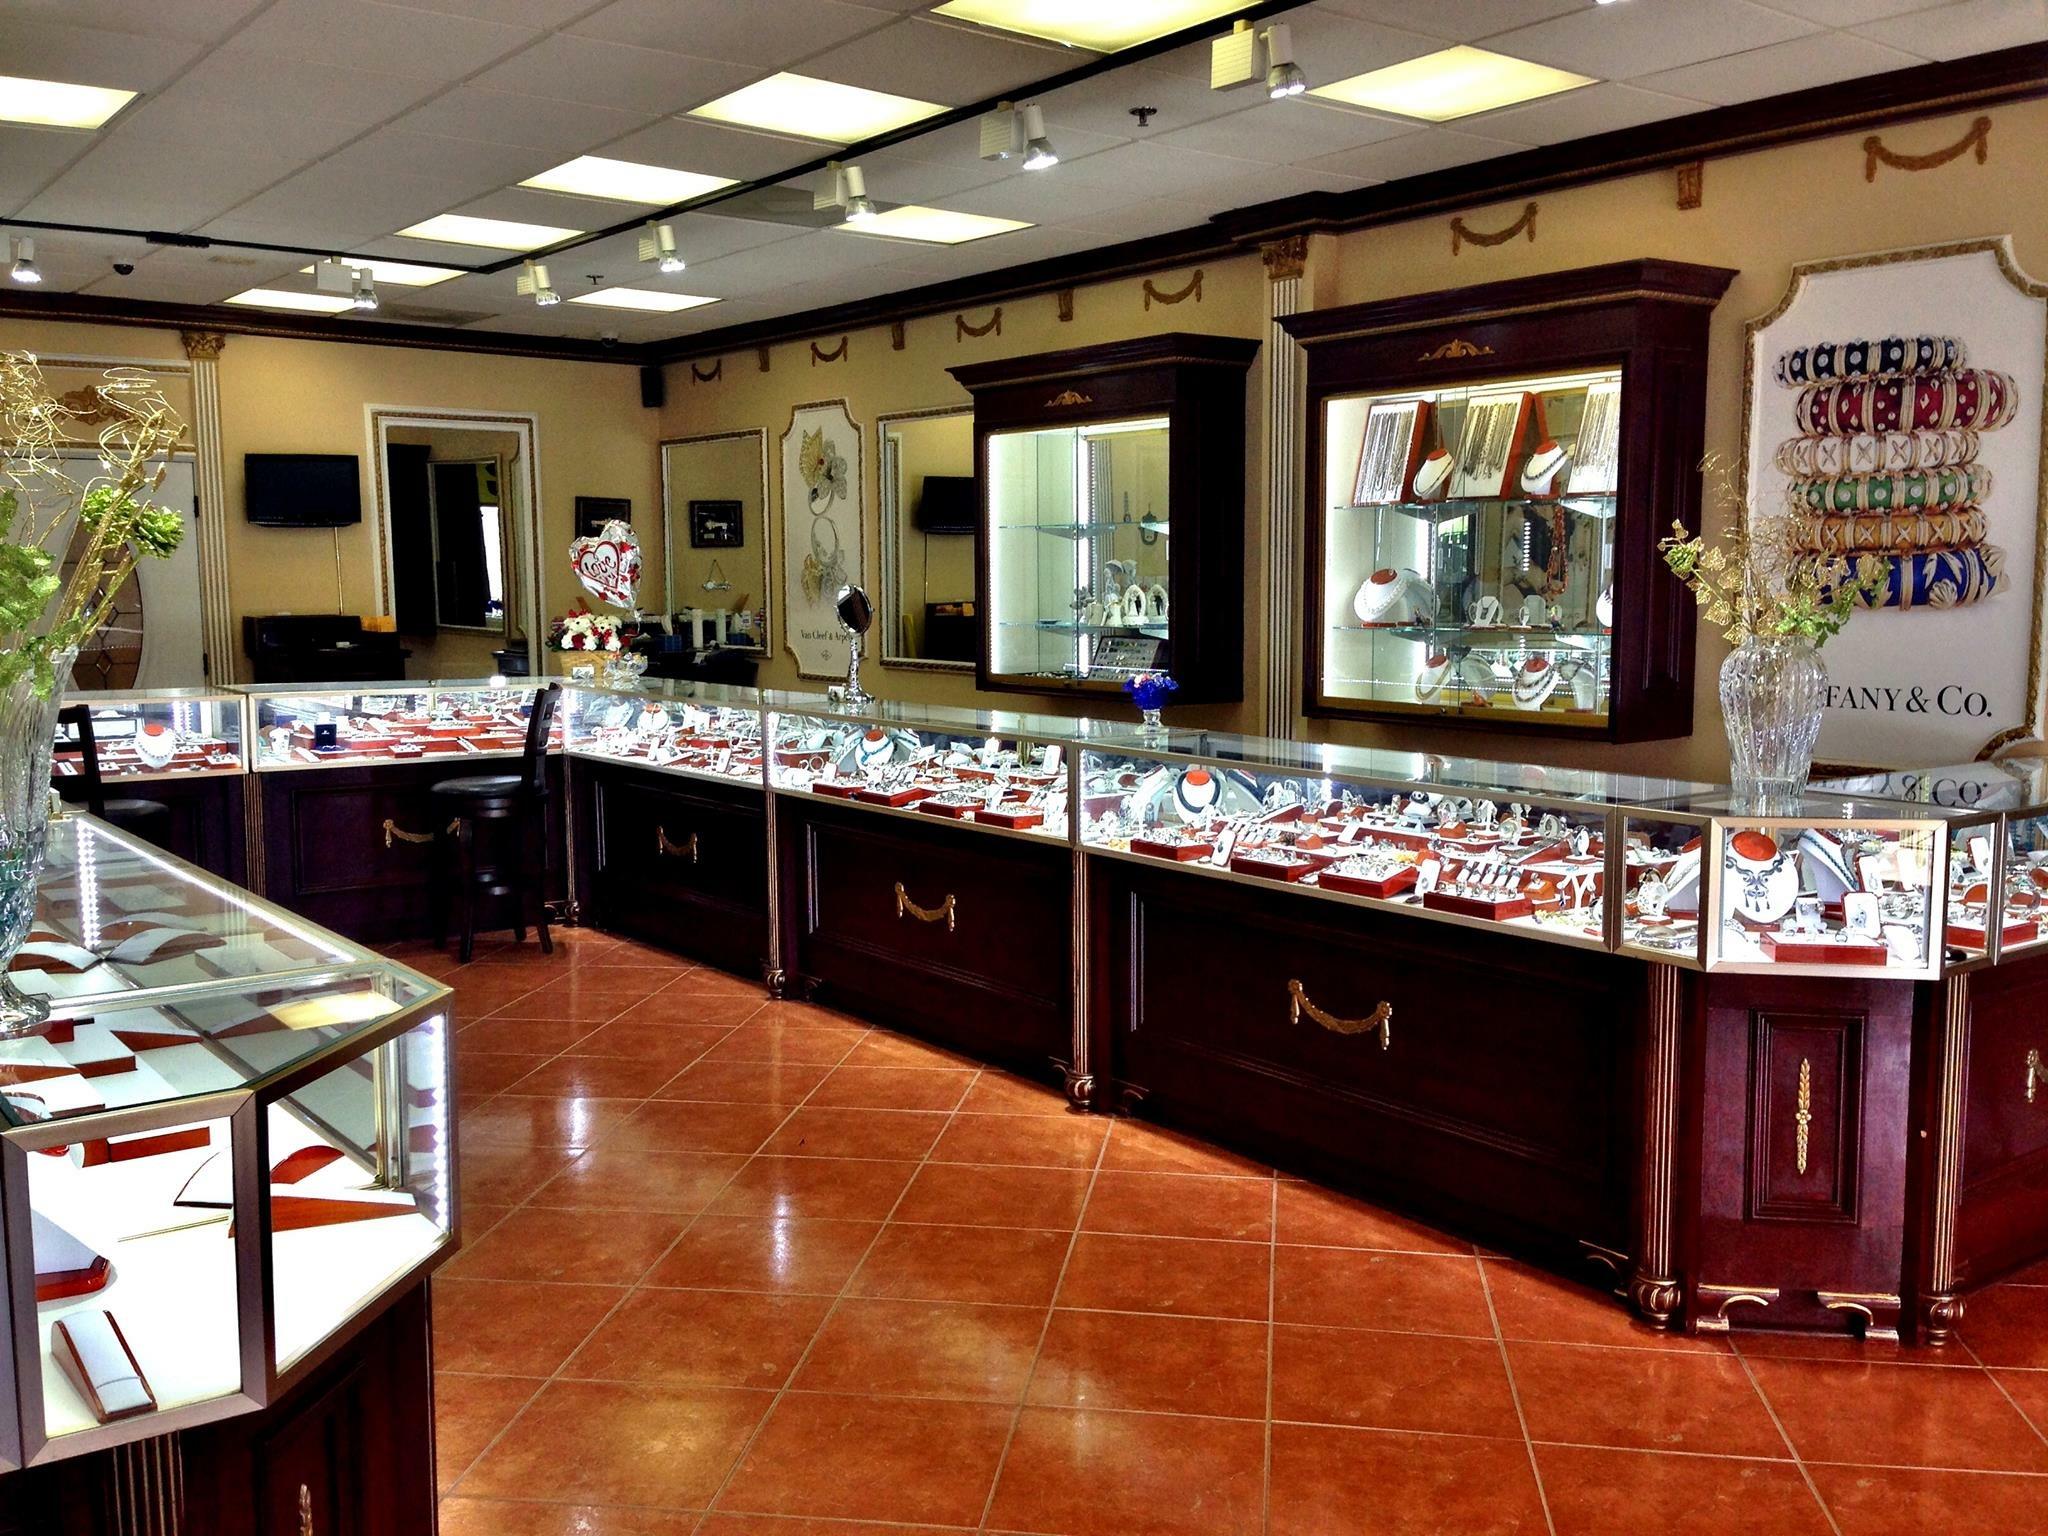 Estate Jewelers At Buckhead Photo